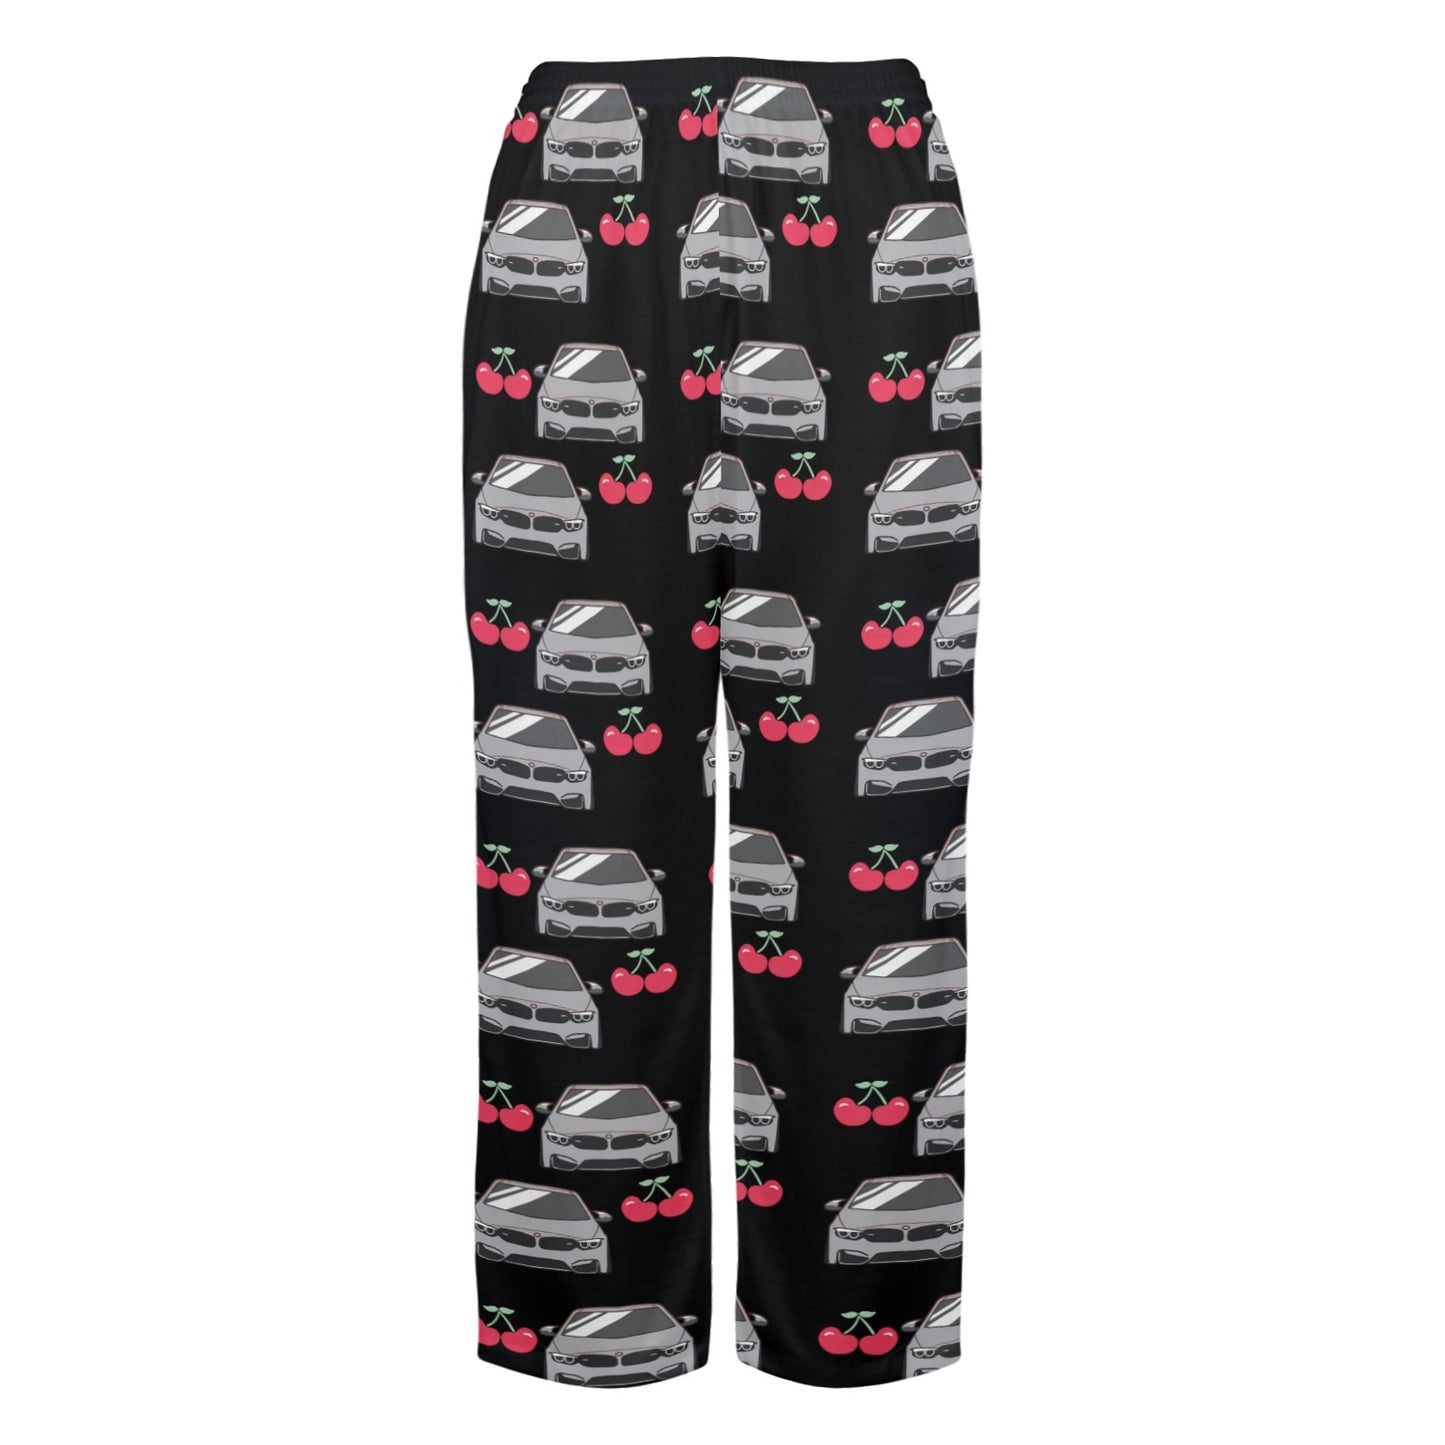 M4 Pajama Pants Women